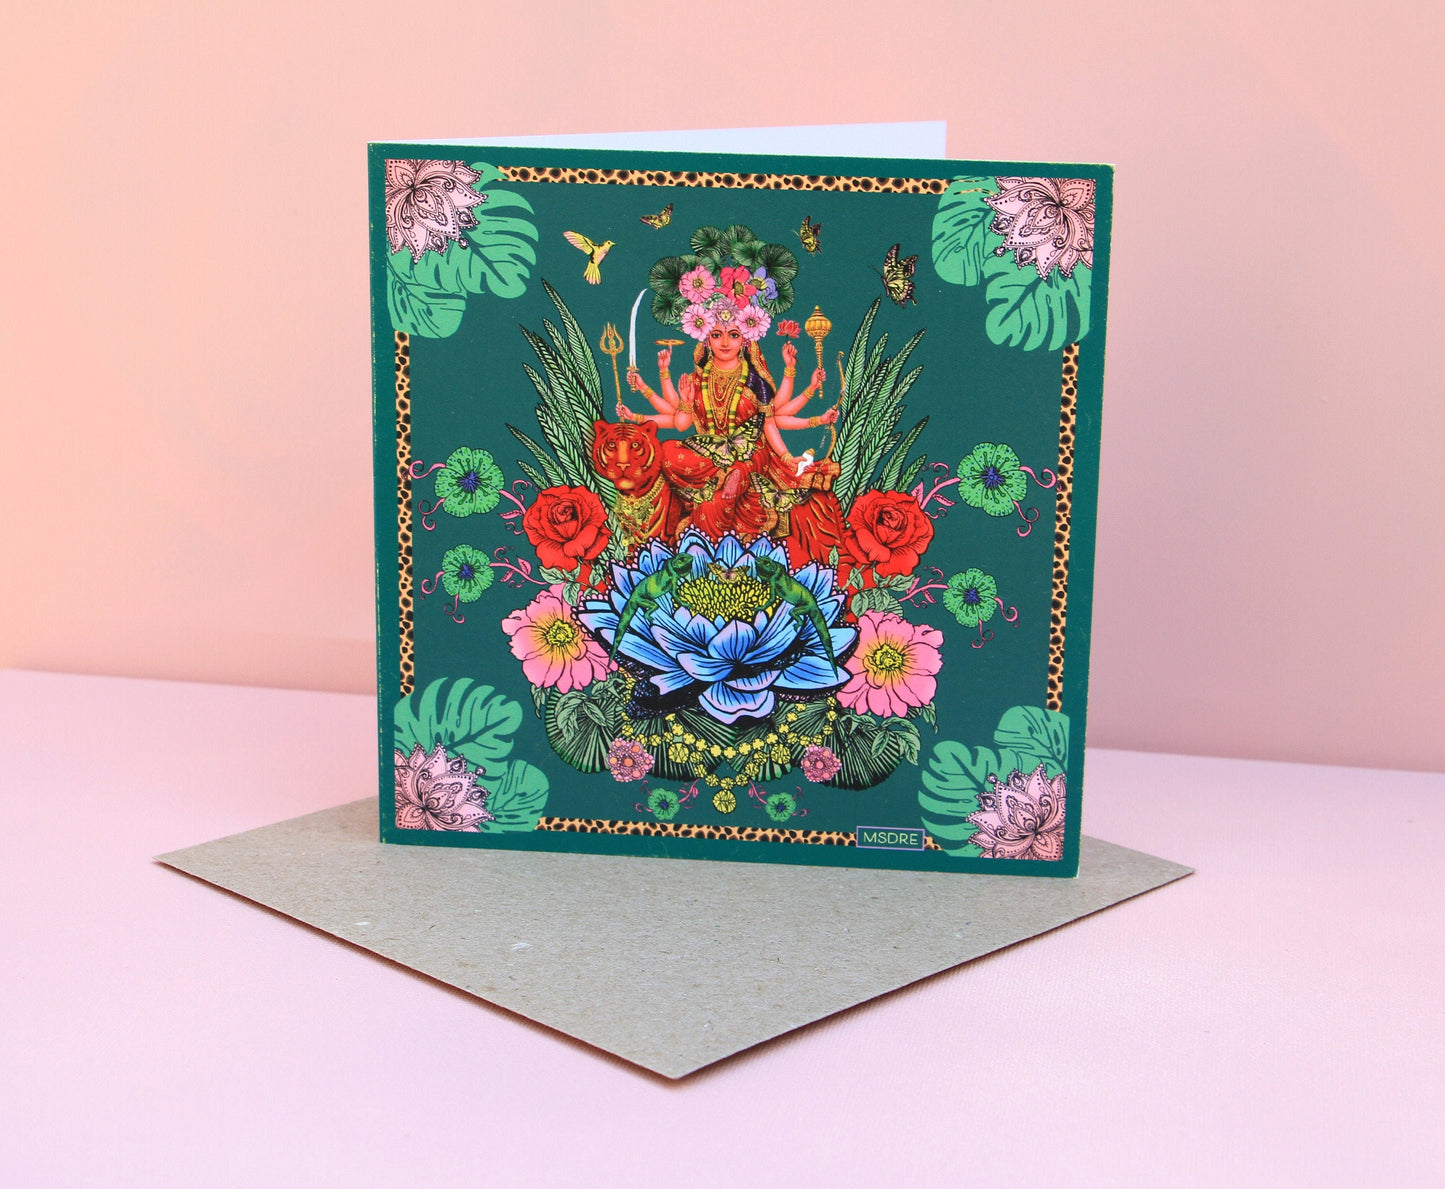 Durga Green Indian Goddess Msdre Greetings Card 15cm Square. Printed in the UK